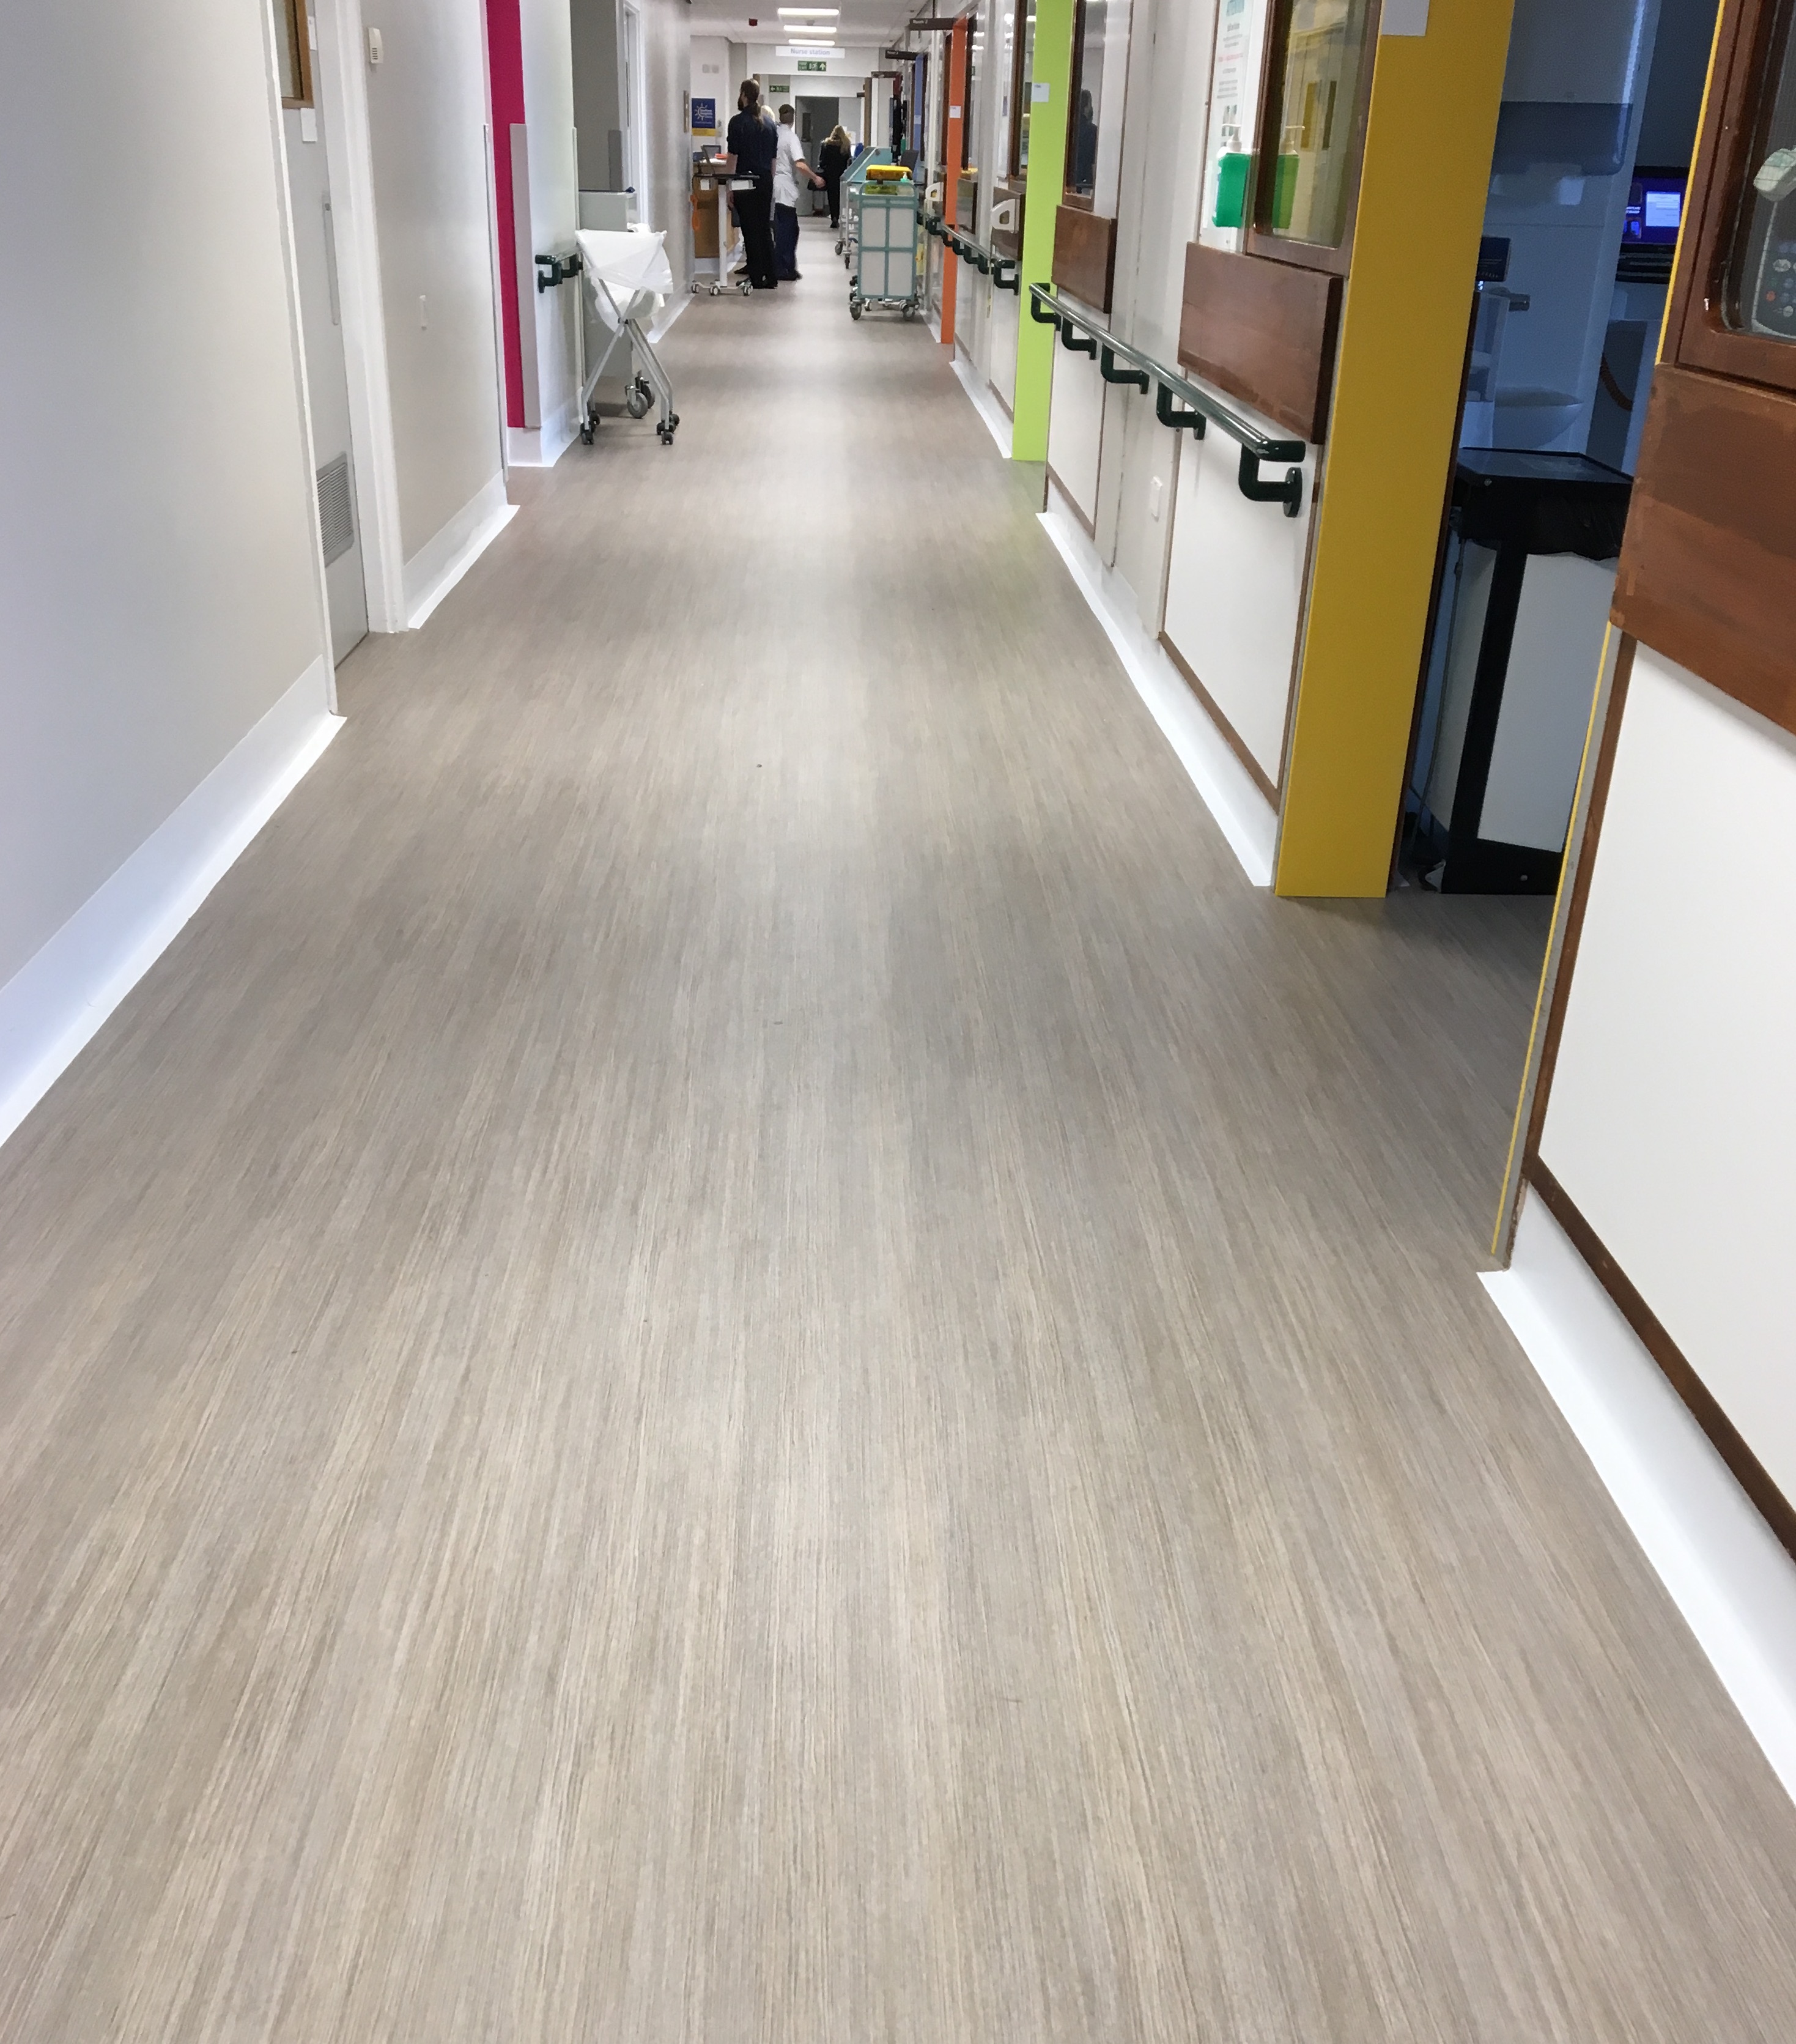 A Cumberlidge install Polyflor vinyl flooring in dementia friendly ward at Royal Hallamshire hospital in Sheffield